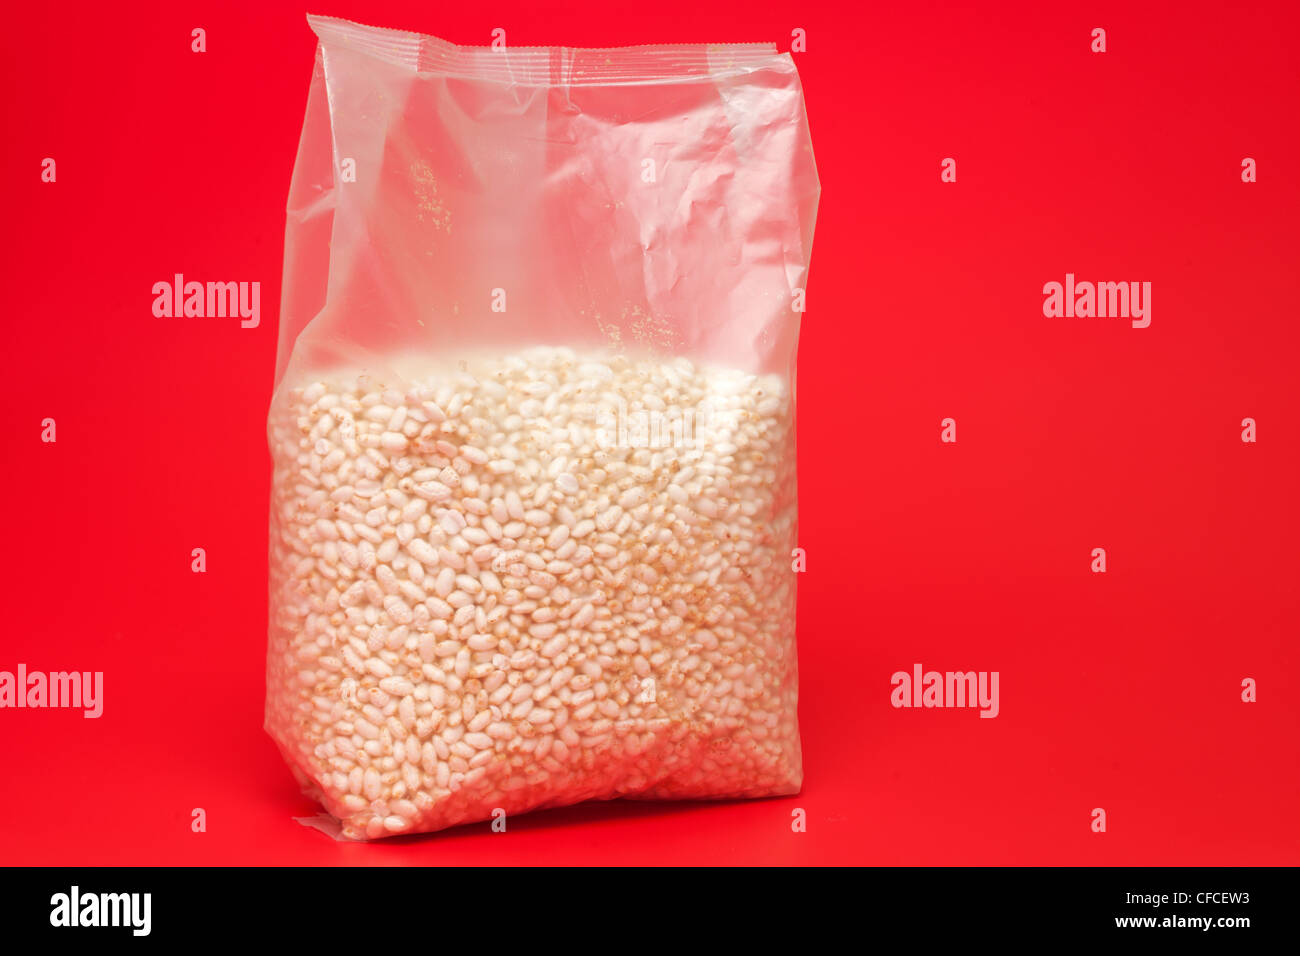 Cellophane bag full of wholegrain puffed rice Stock Photo